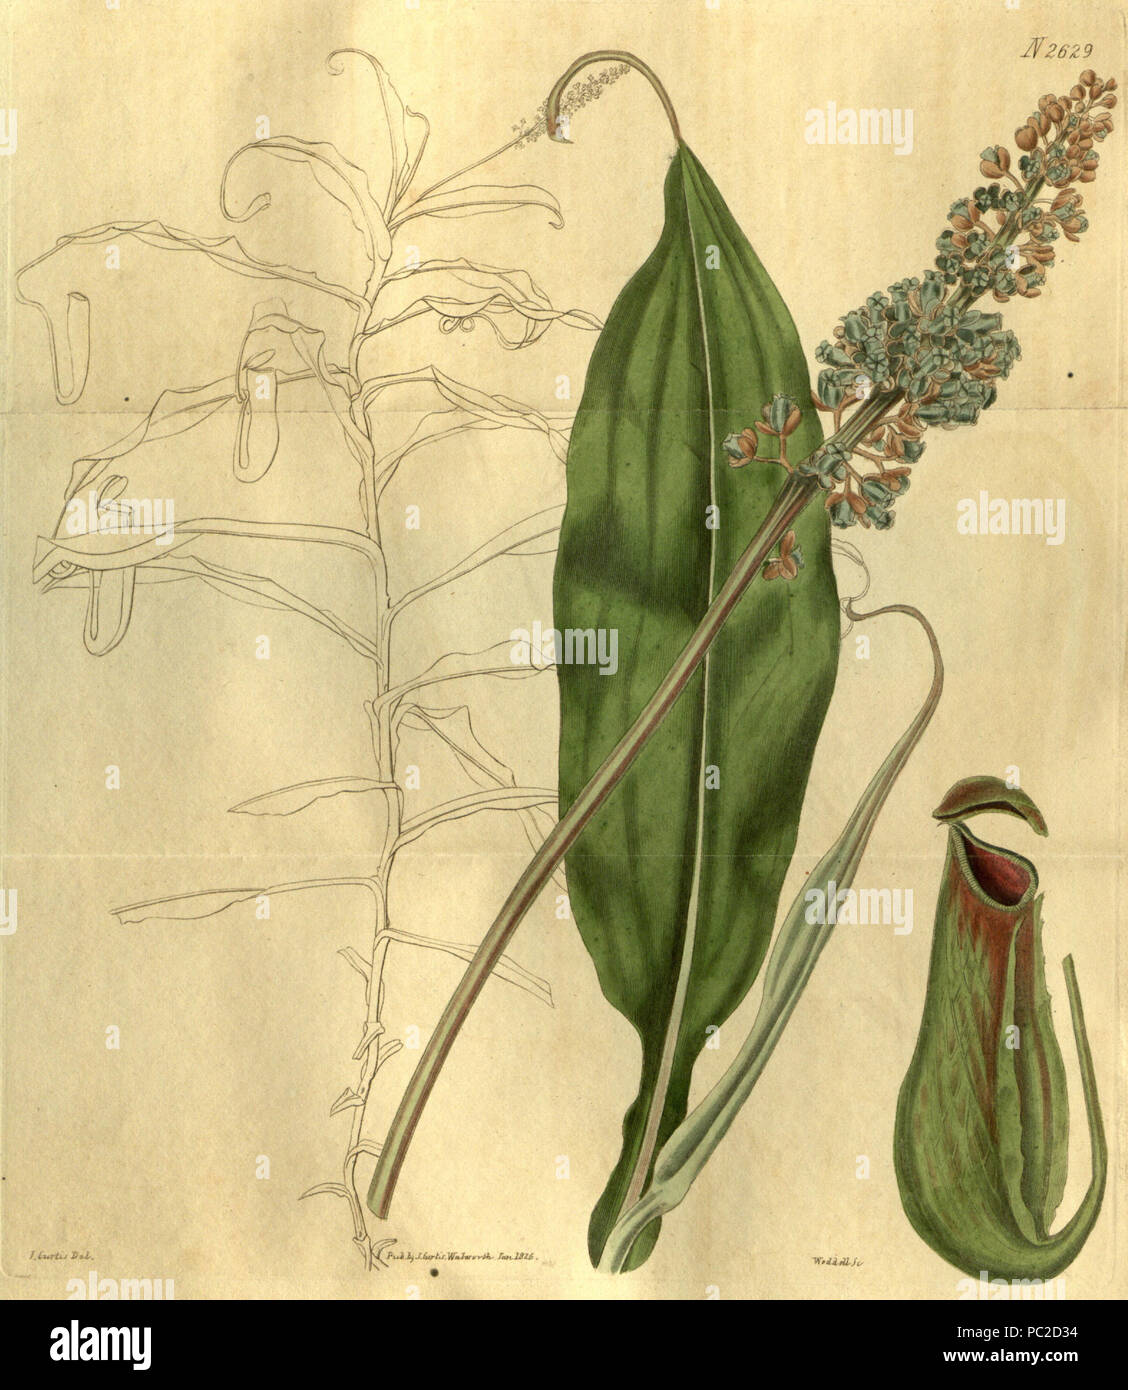 440 Nepenthes phyllamphora - Curtis’s Botanical Magazine (1826) Stock Photo